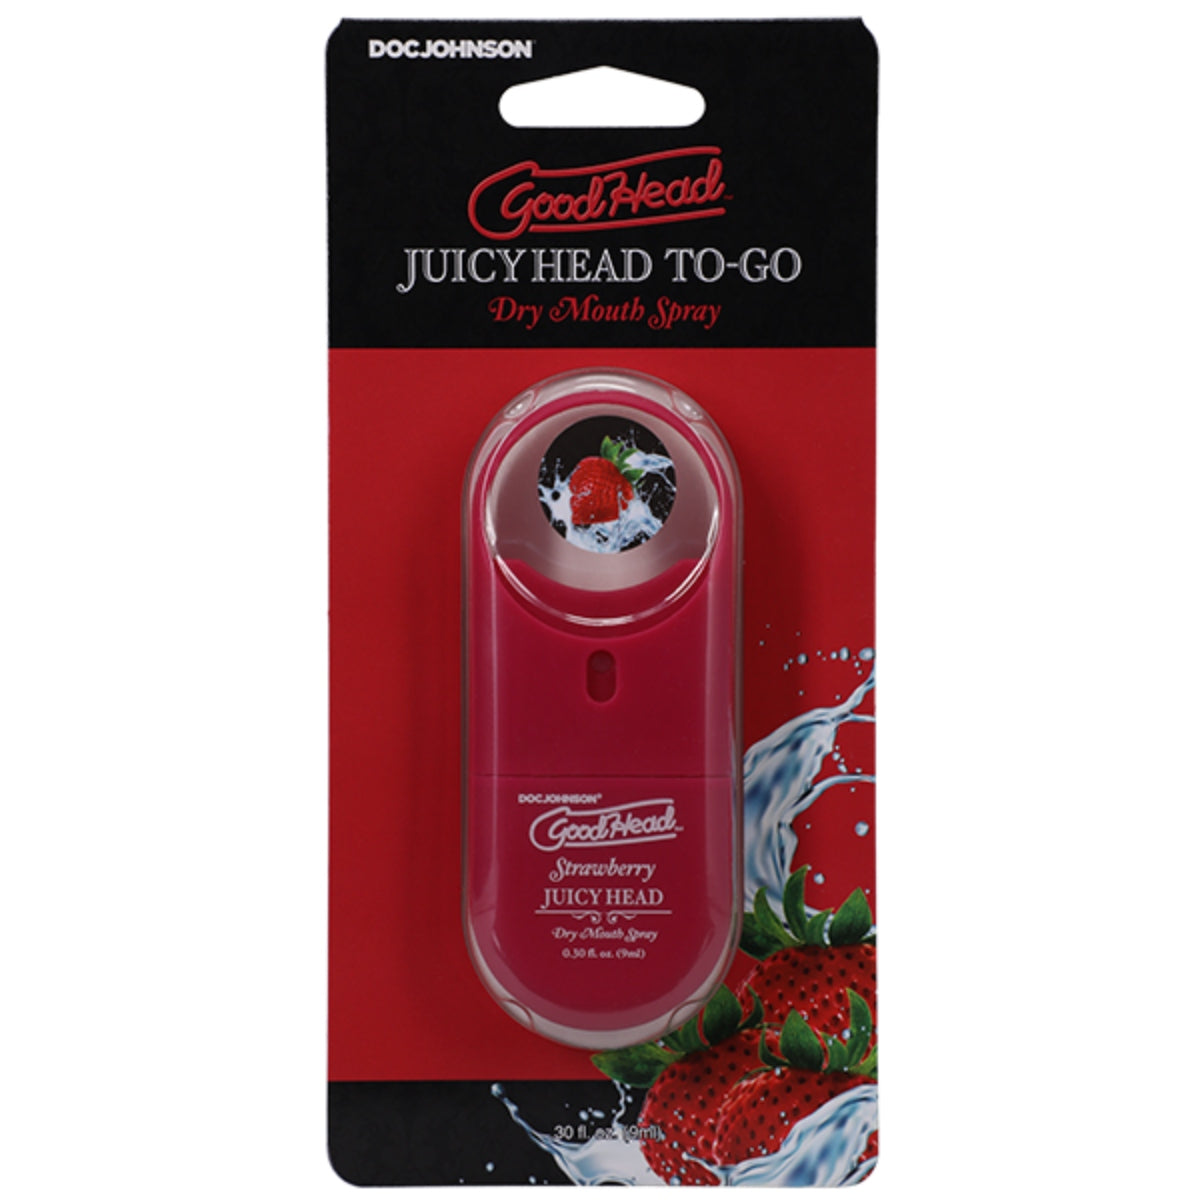 Flavoured Lube Goodhead Juicy Head Dry Mouth Spray To-Go Strawberry 30 fl oz   